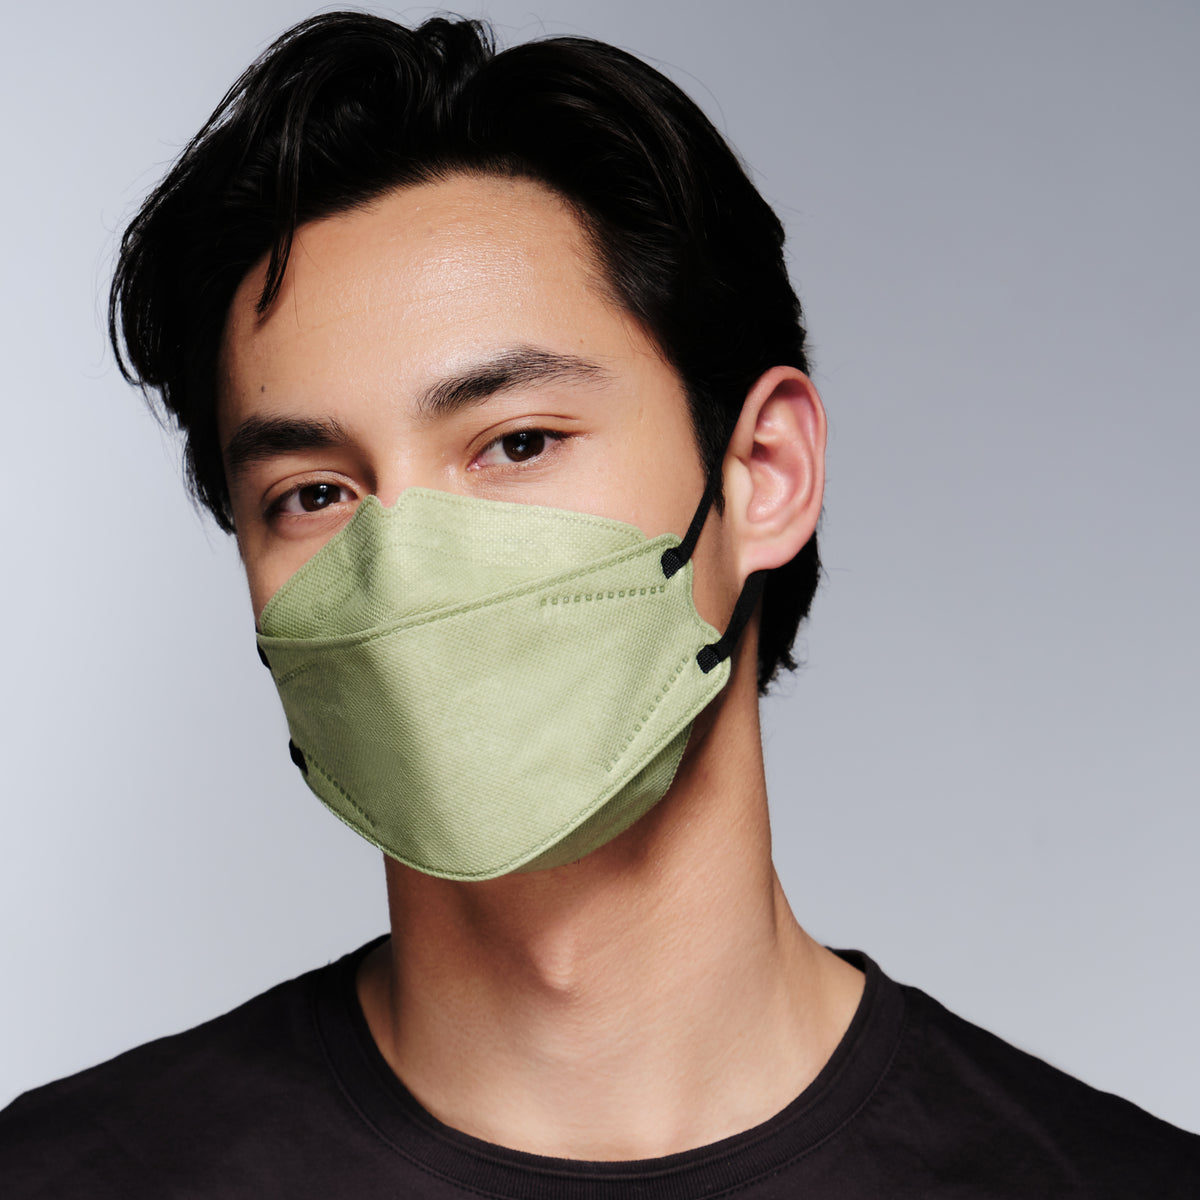 KN95 Respirator Face Mask: Explore Bundle